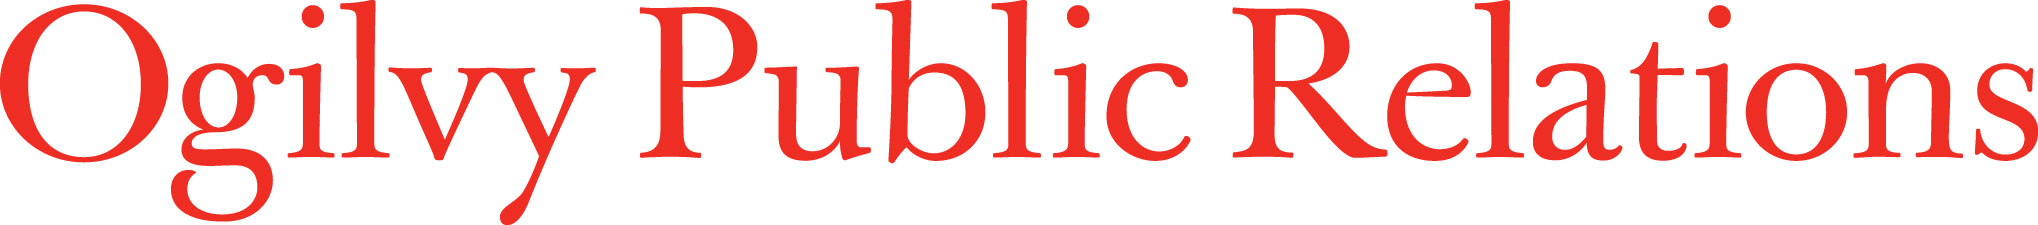  Top Digital PR Company Logo: Ogilvy Public Relations